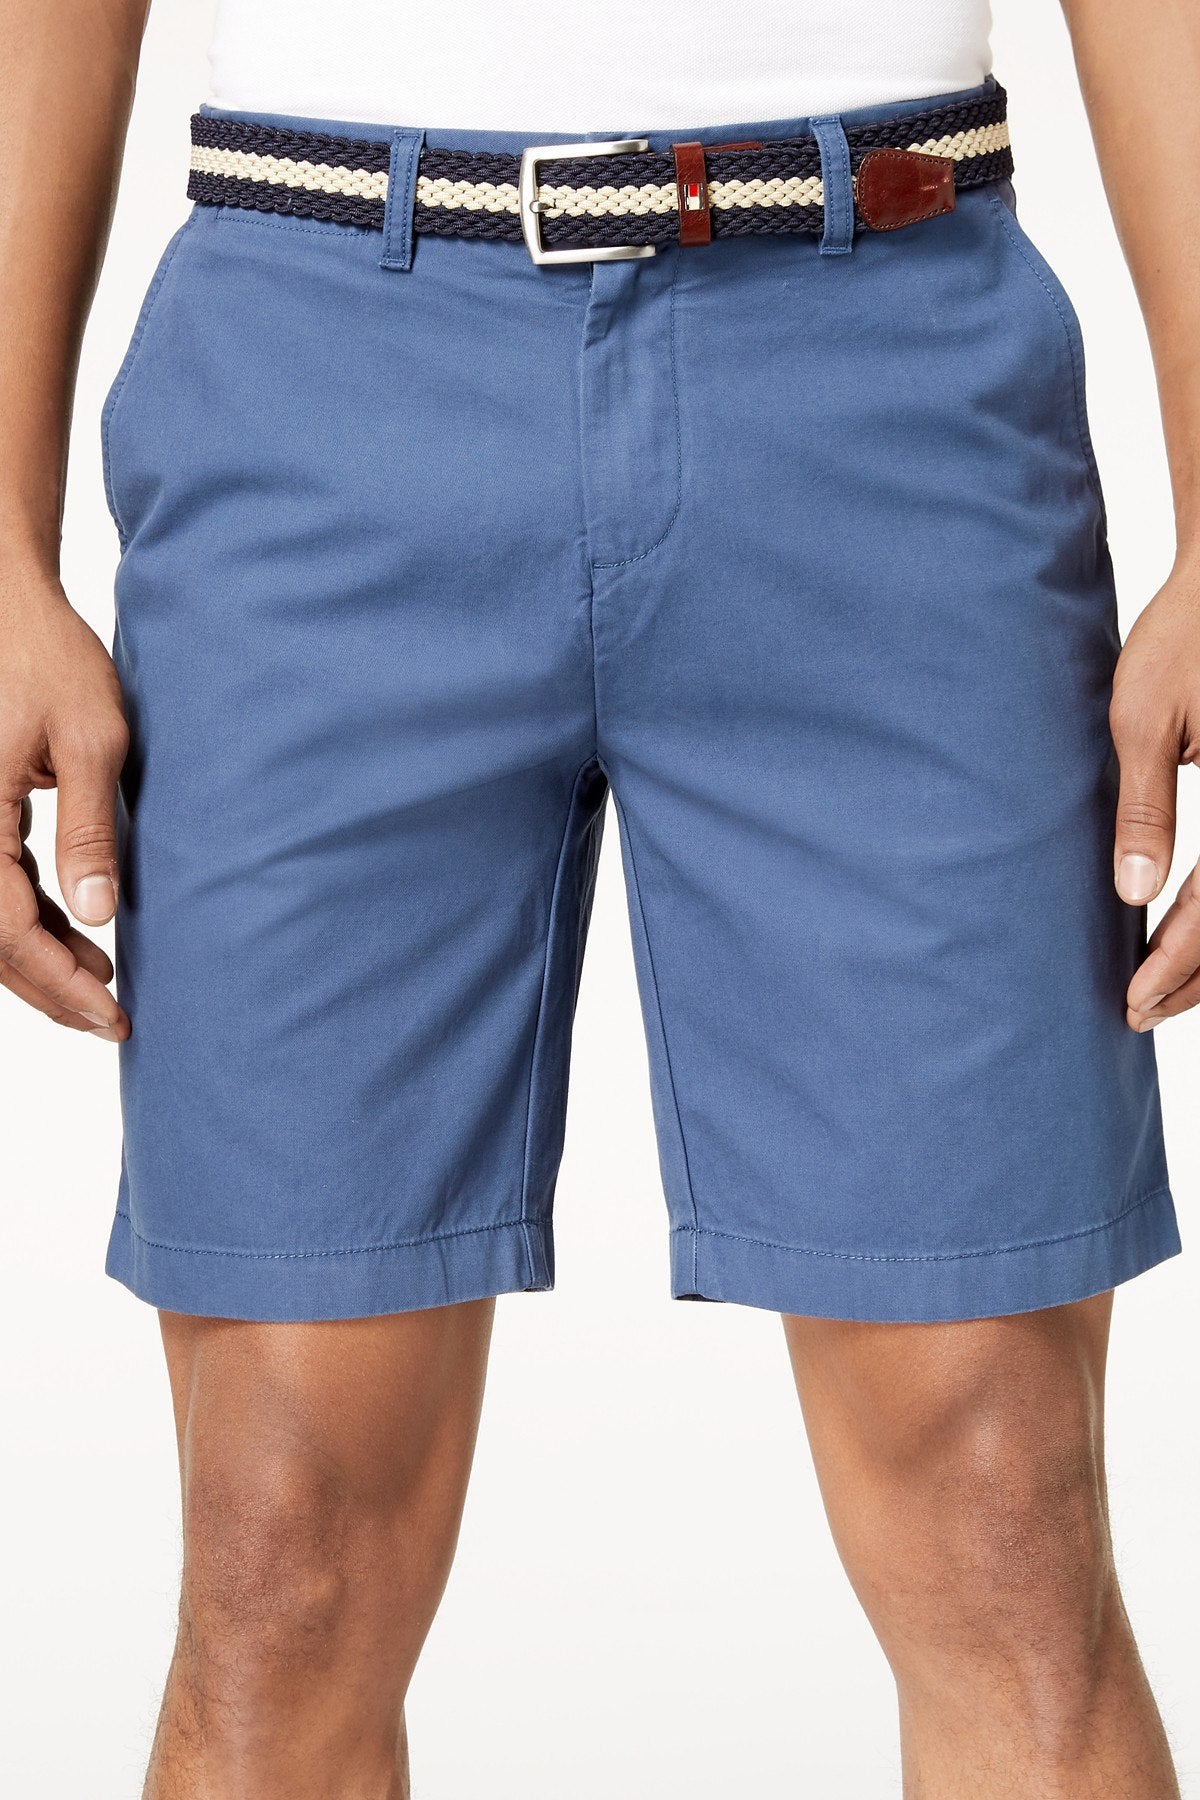 blue tommy hilfiger shorts cheap online